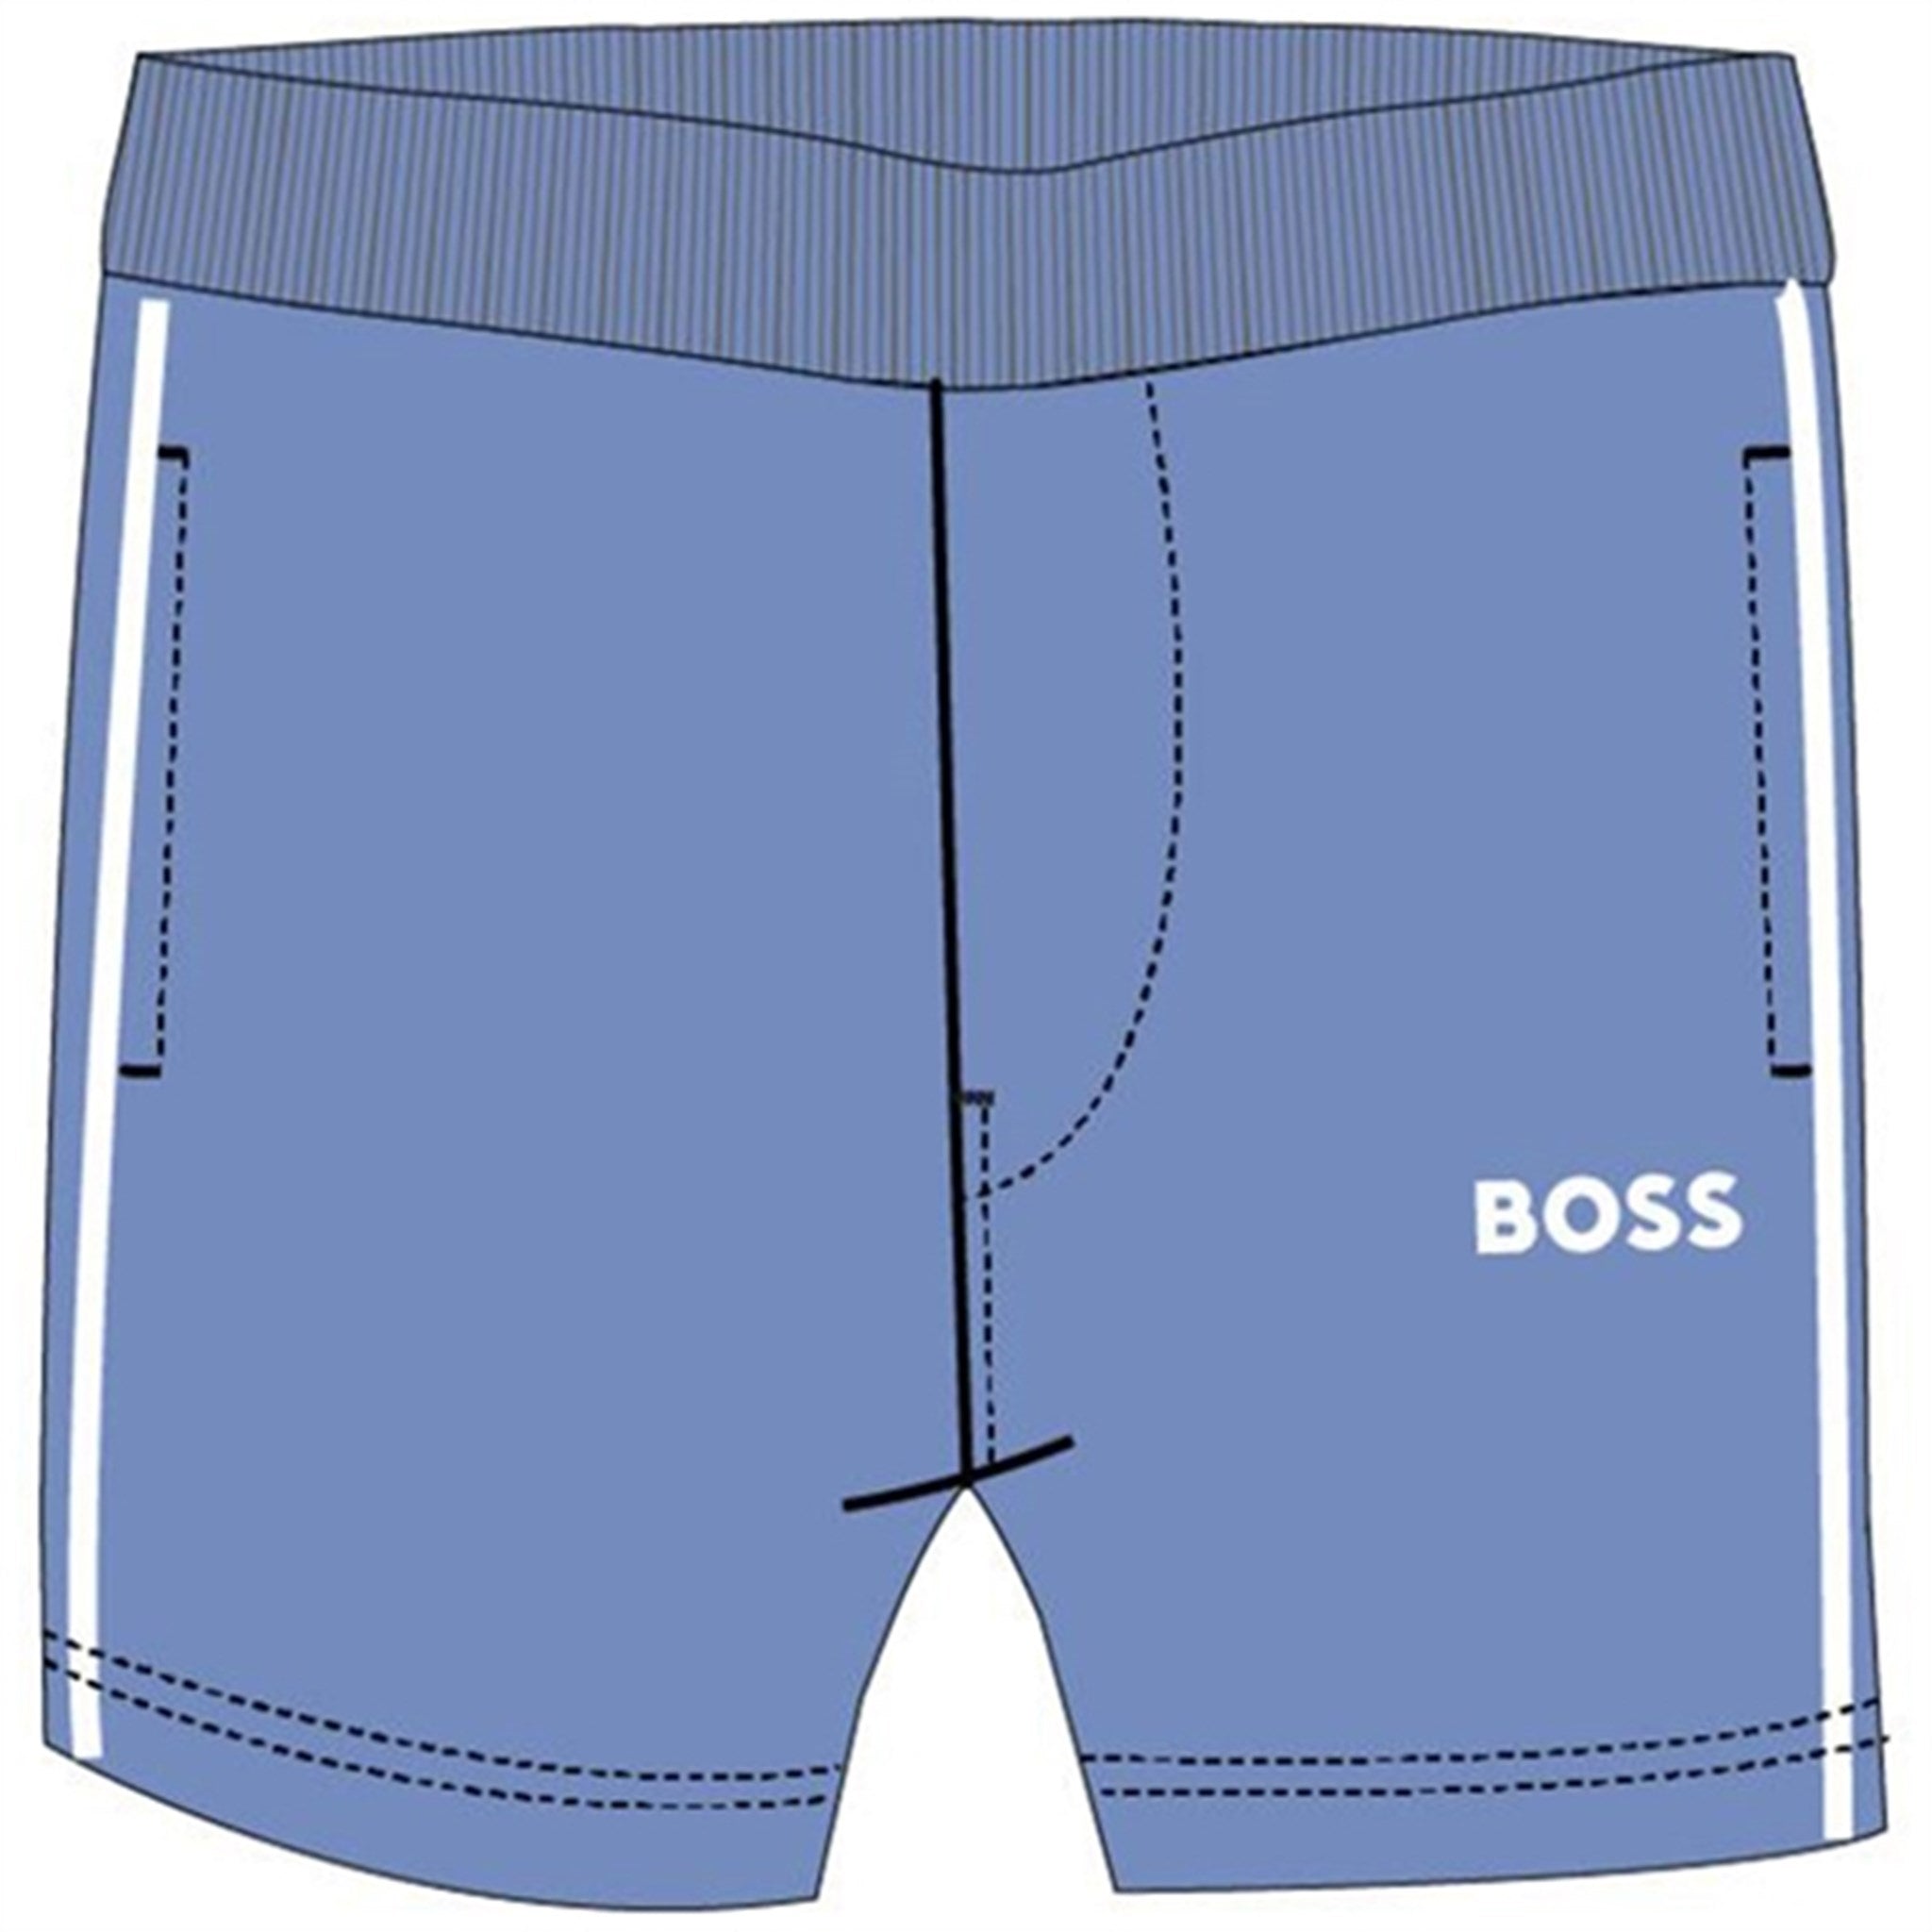 Hugo Boss Bebis Shorts Pale Blue